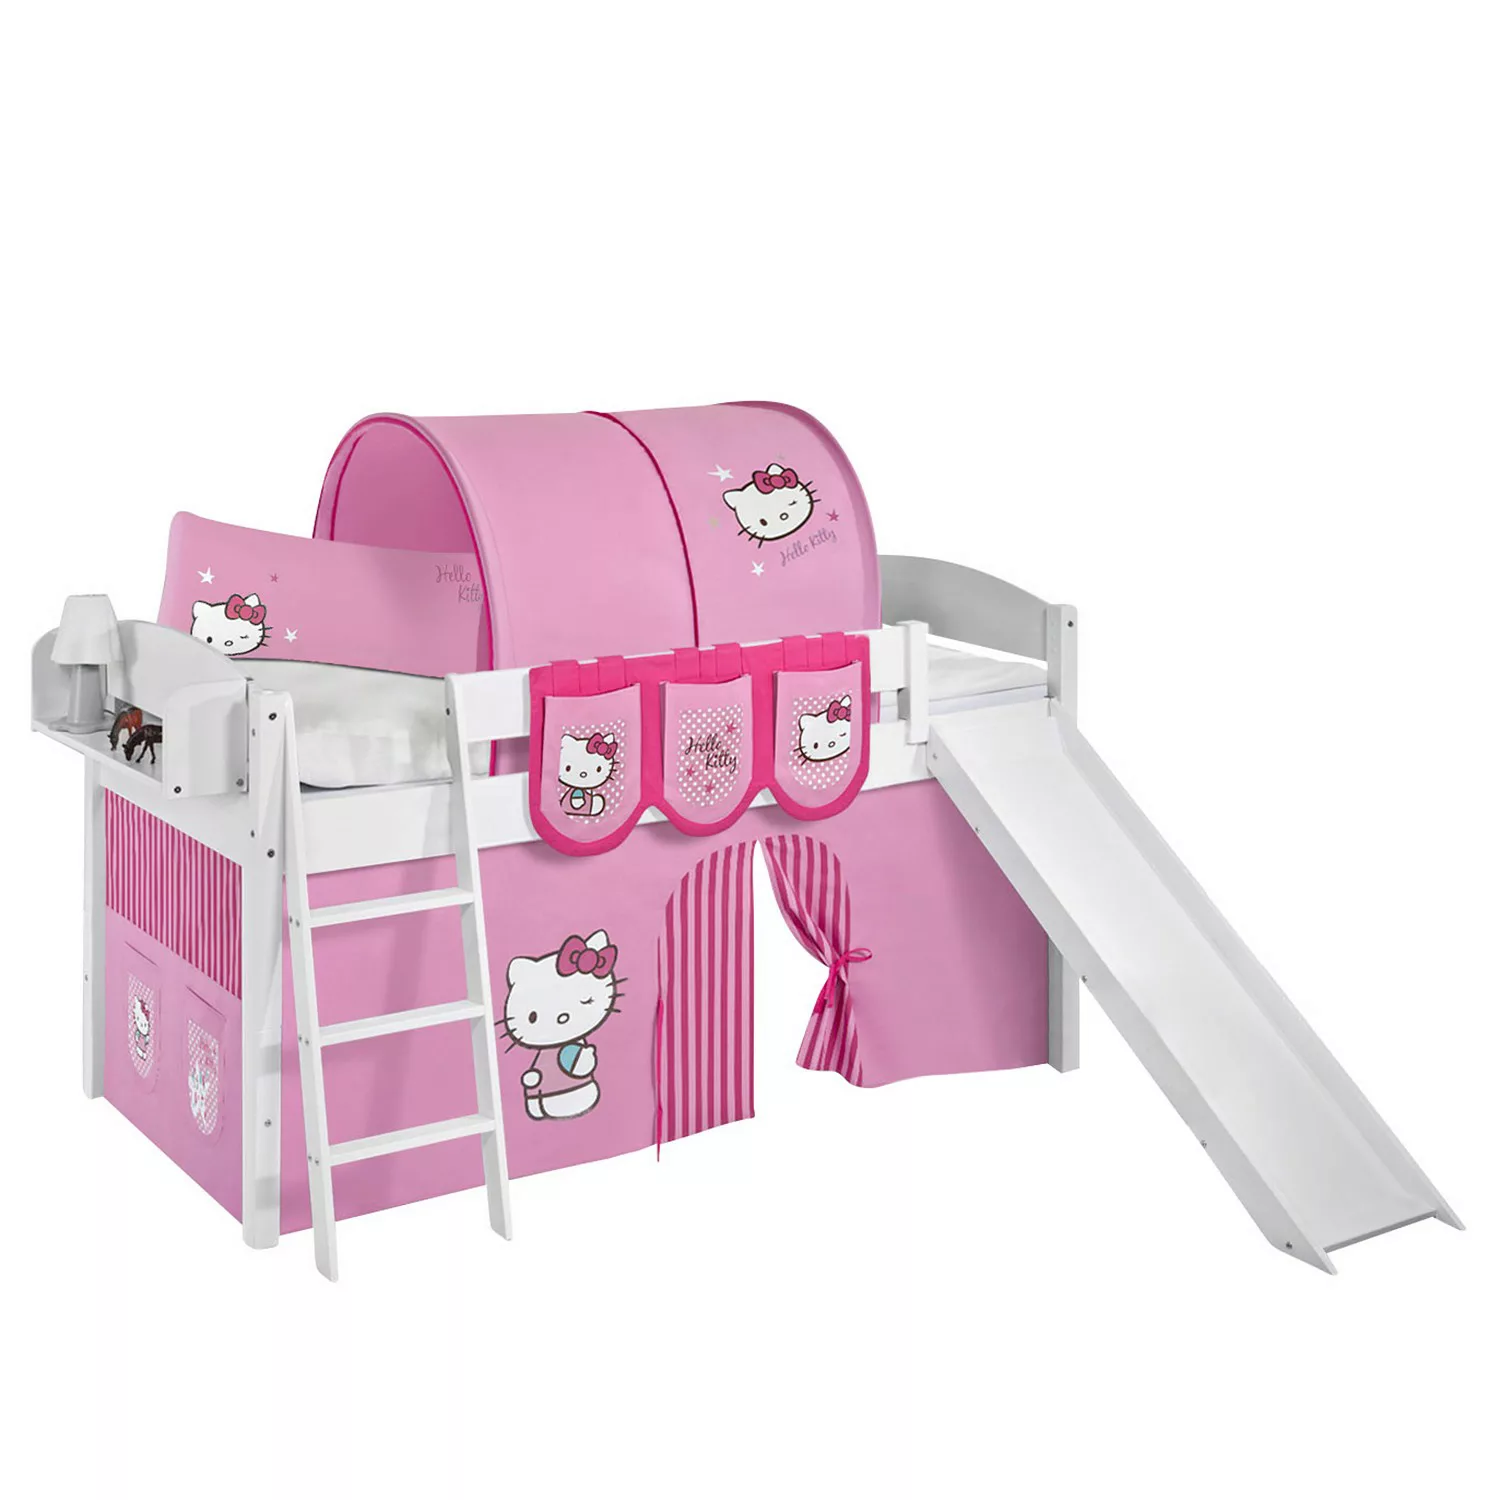 Lilokids Hochbett Spielbett IDA 4106 Hello Kitty - Teilbares Systemhochbett günstig online kaufen